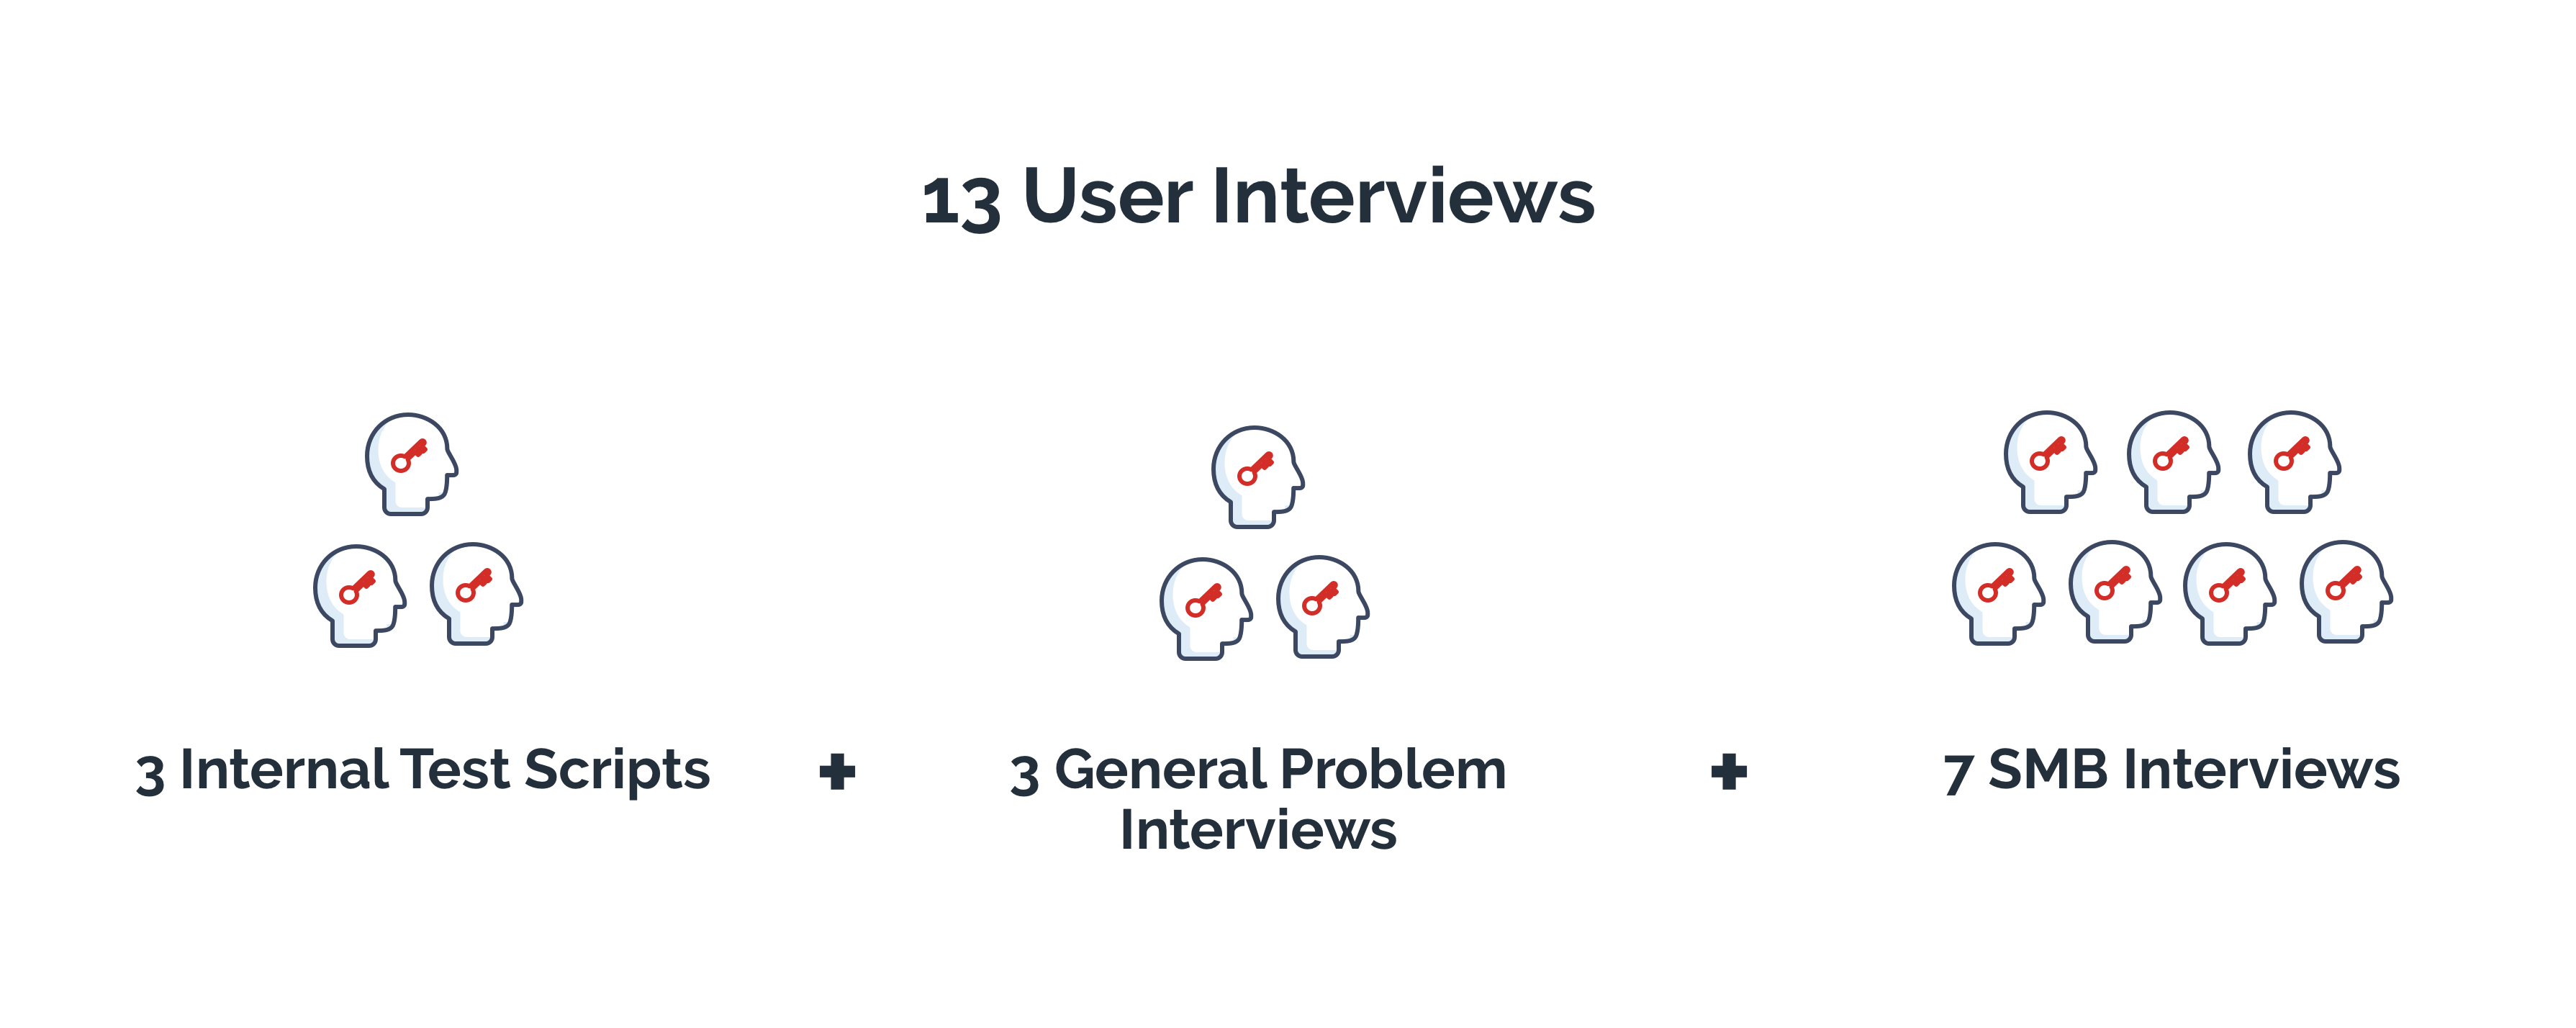 Interviews0.1